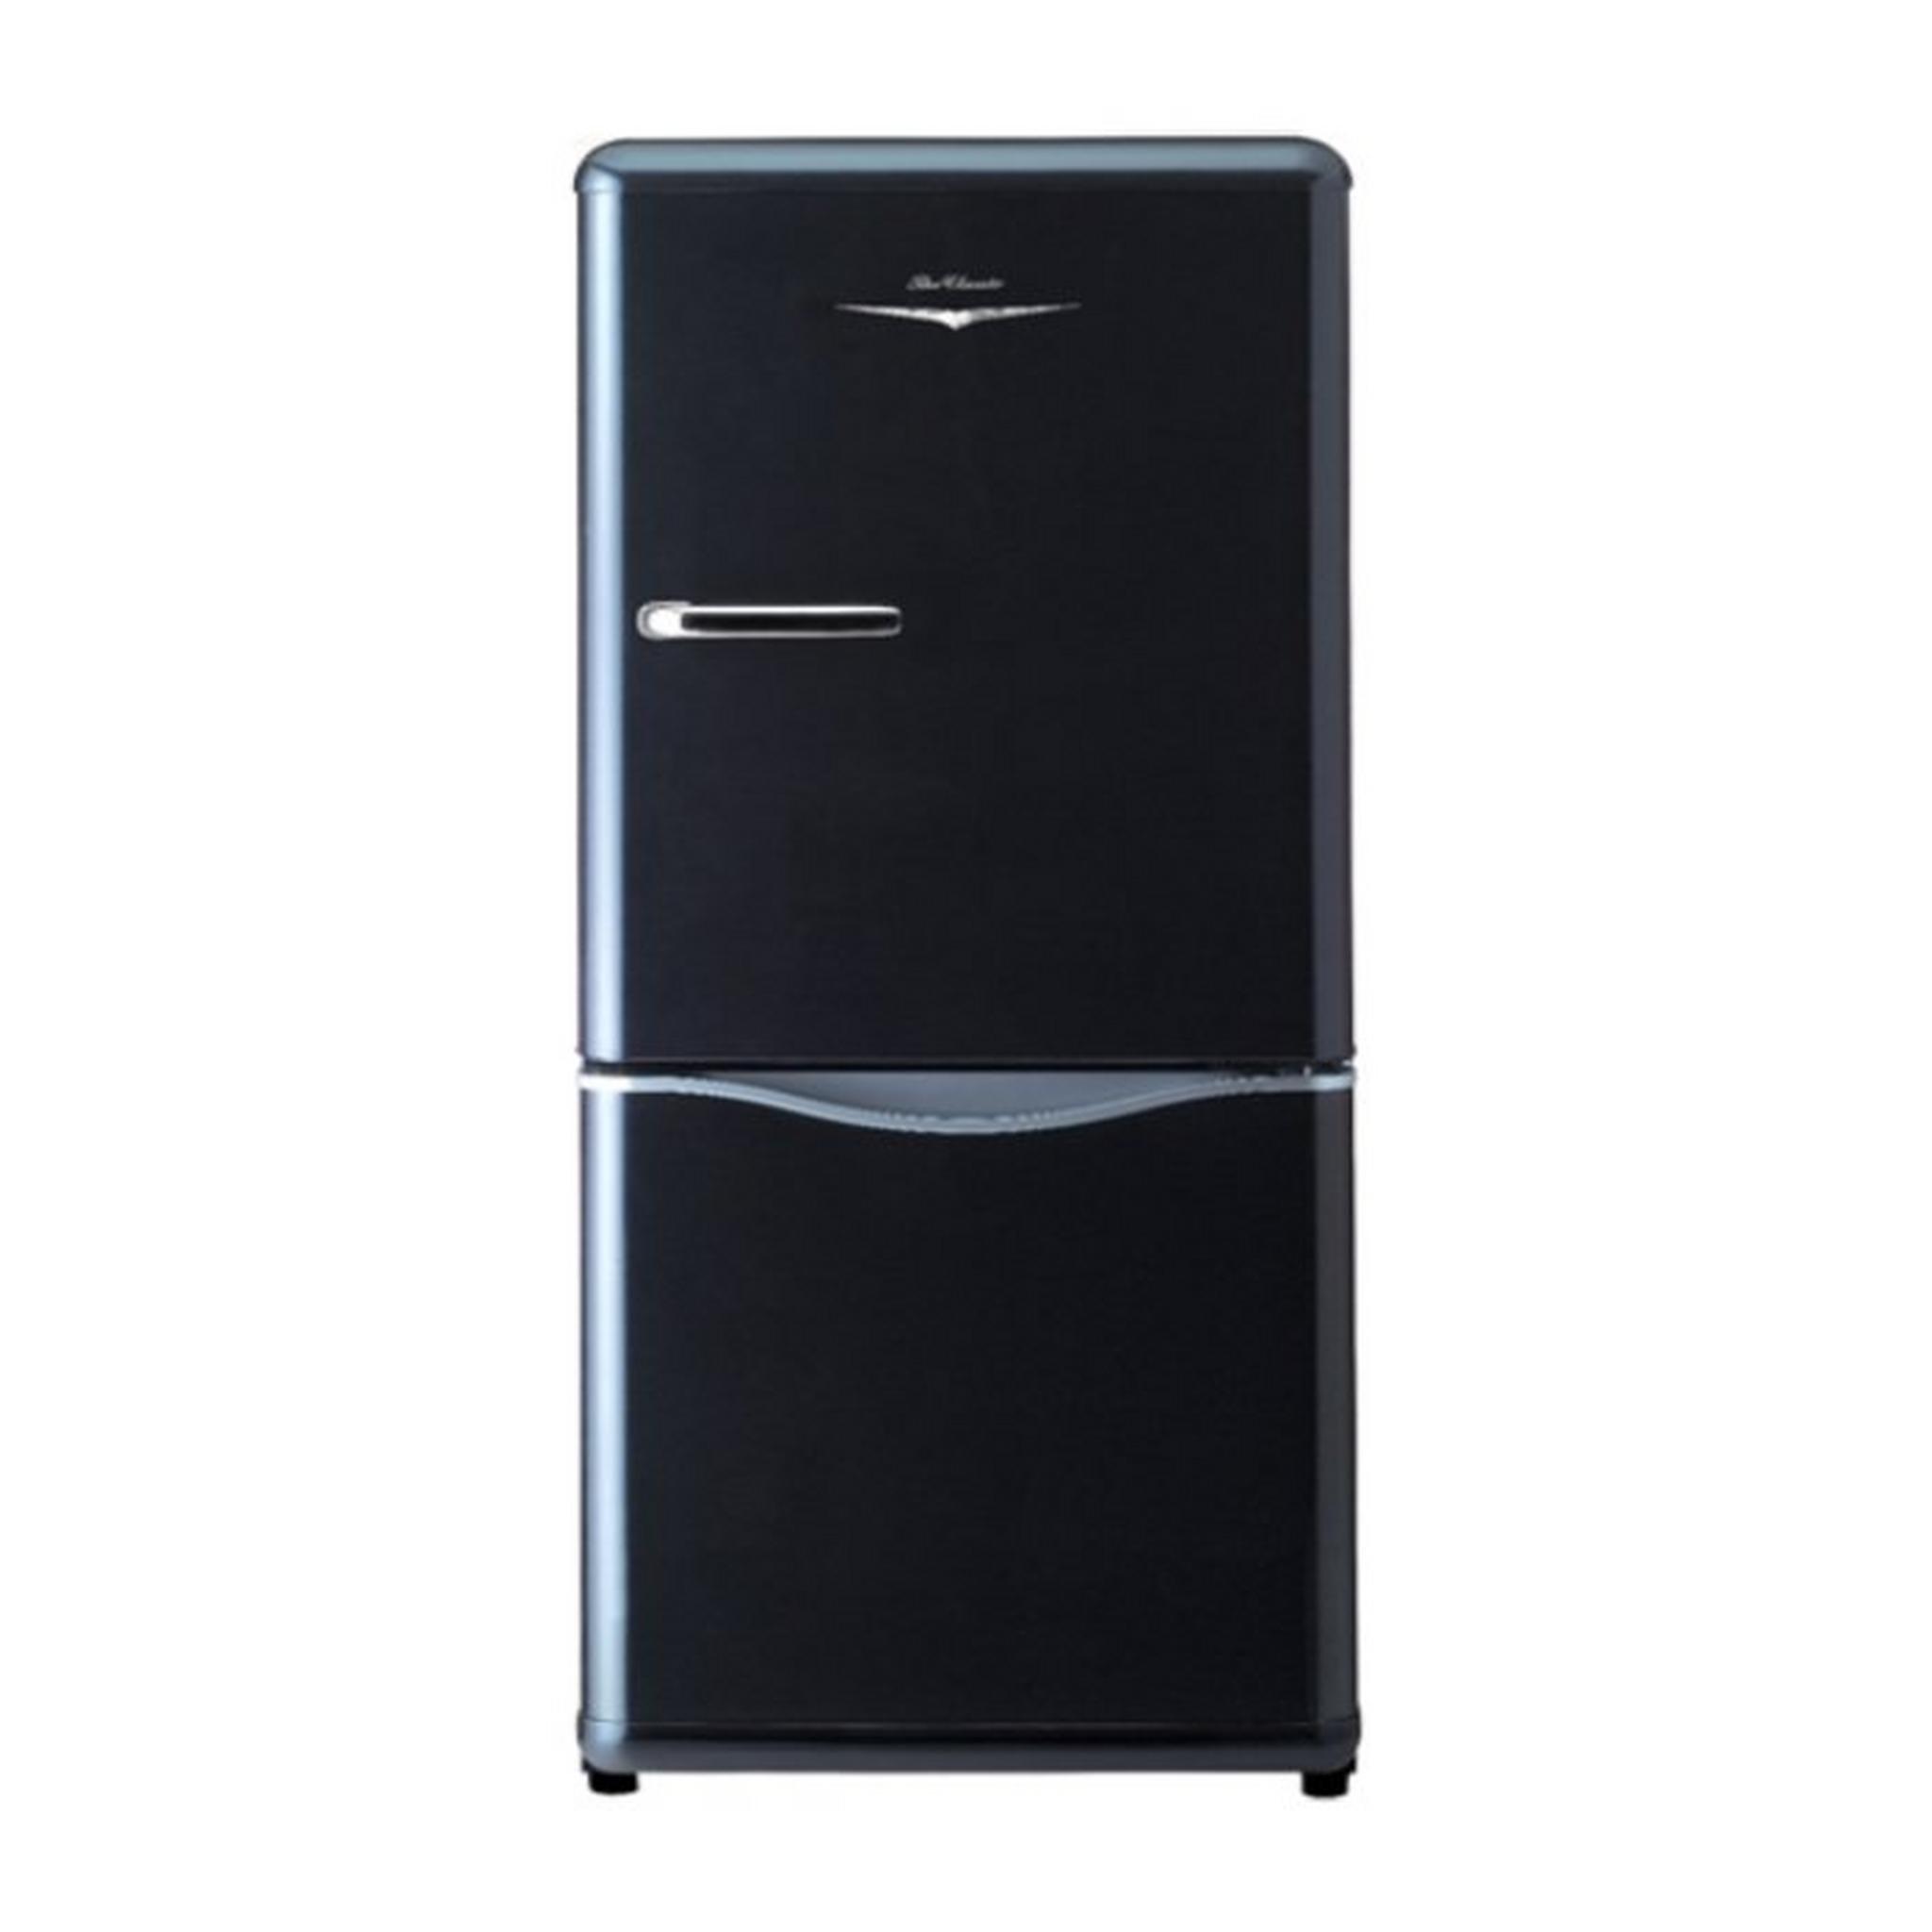 Daewoo 5.3 CFT Bottom Freezer Refrigerator - Black (RF-173NC)